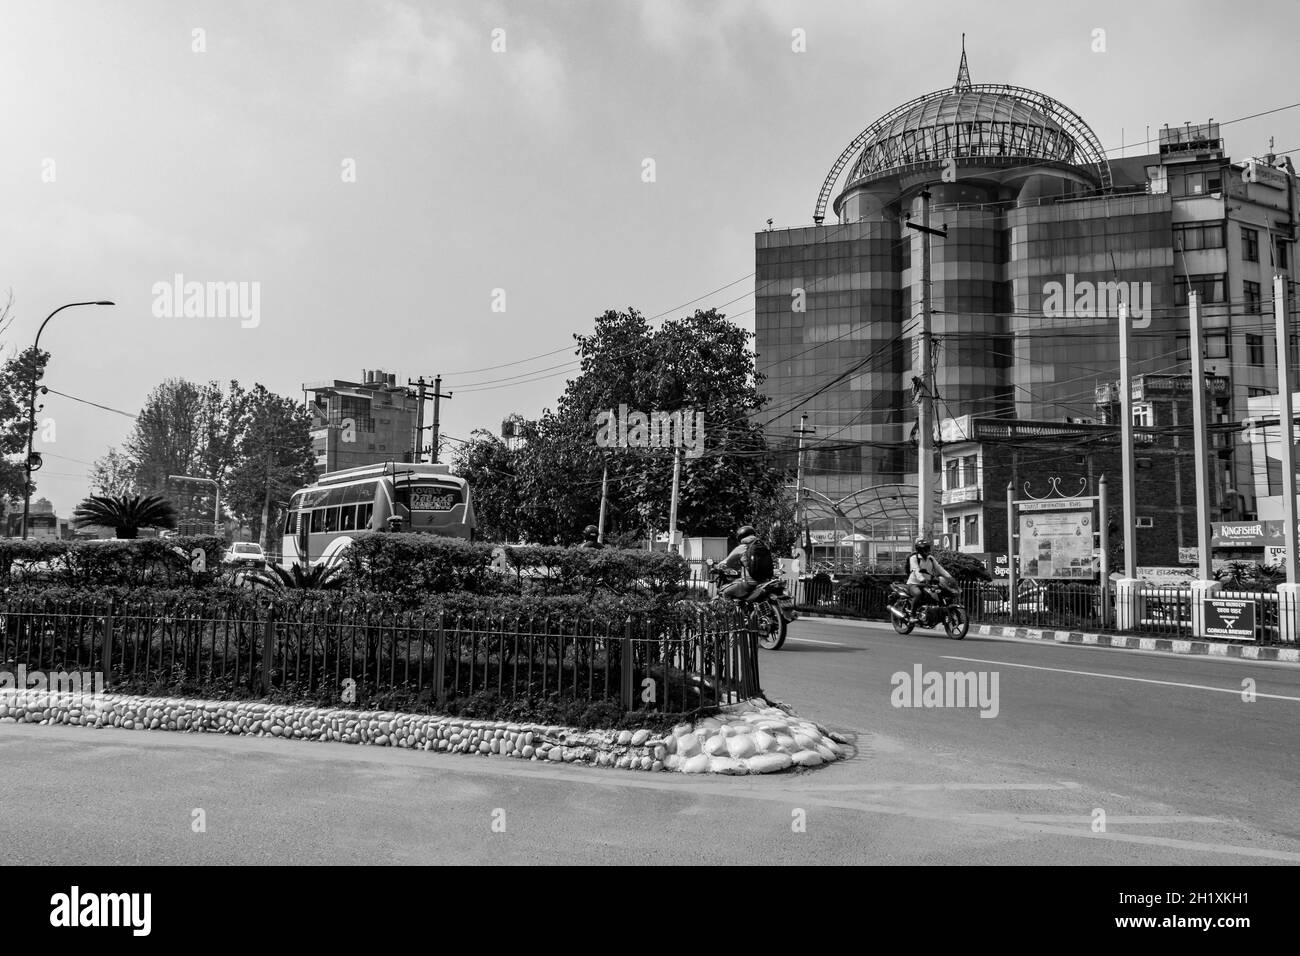 Kathmandu Nepal 21. Mai 2018 immagine in bianco e nero di edifici hotel e la strada per l'aeroporto di Kathmandu Nepal. Foto Stock